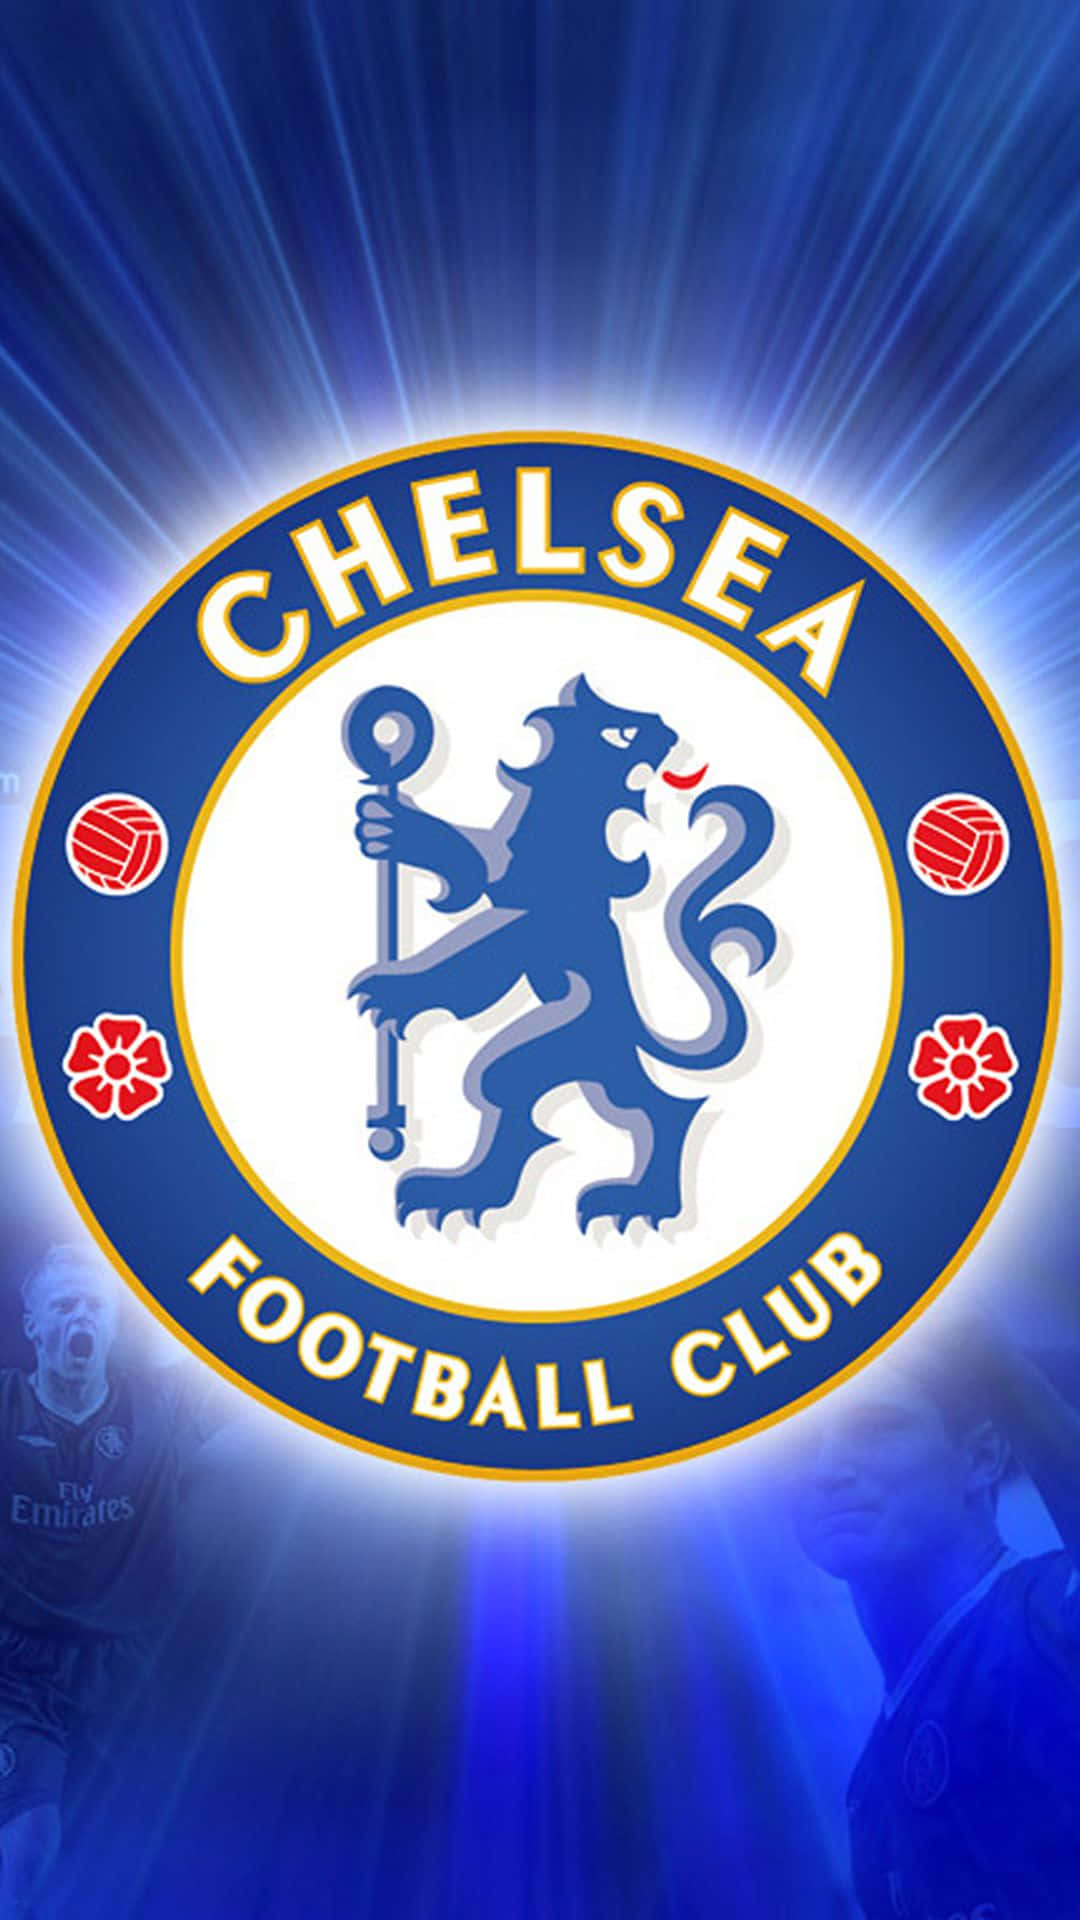 Football Galaxy Chelsea Club Logo With Blue Lights Wallpaper